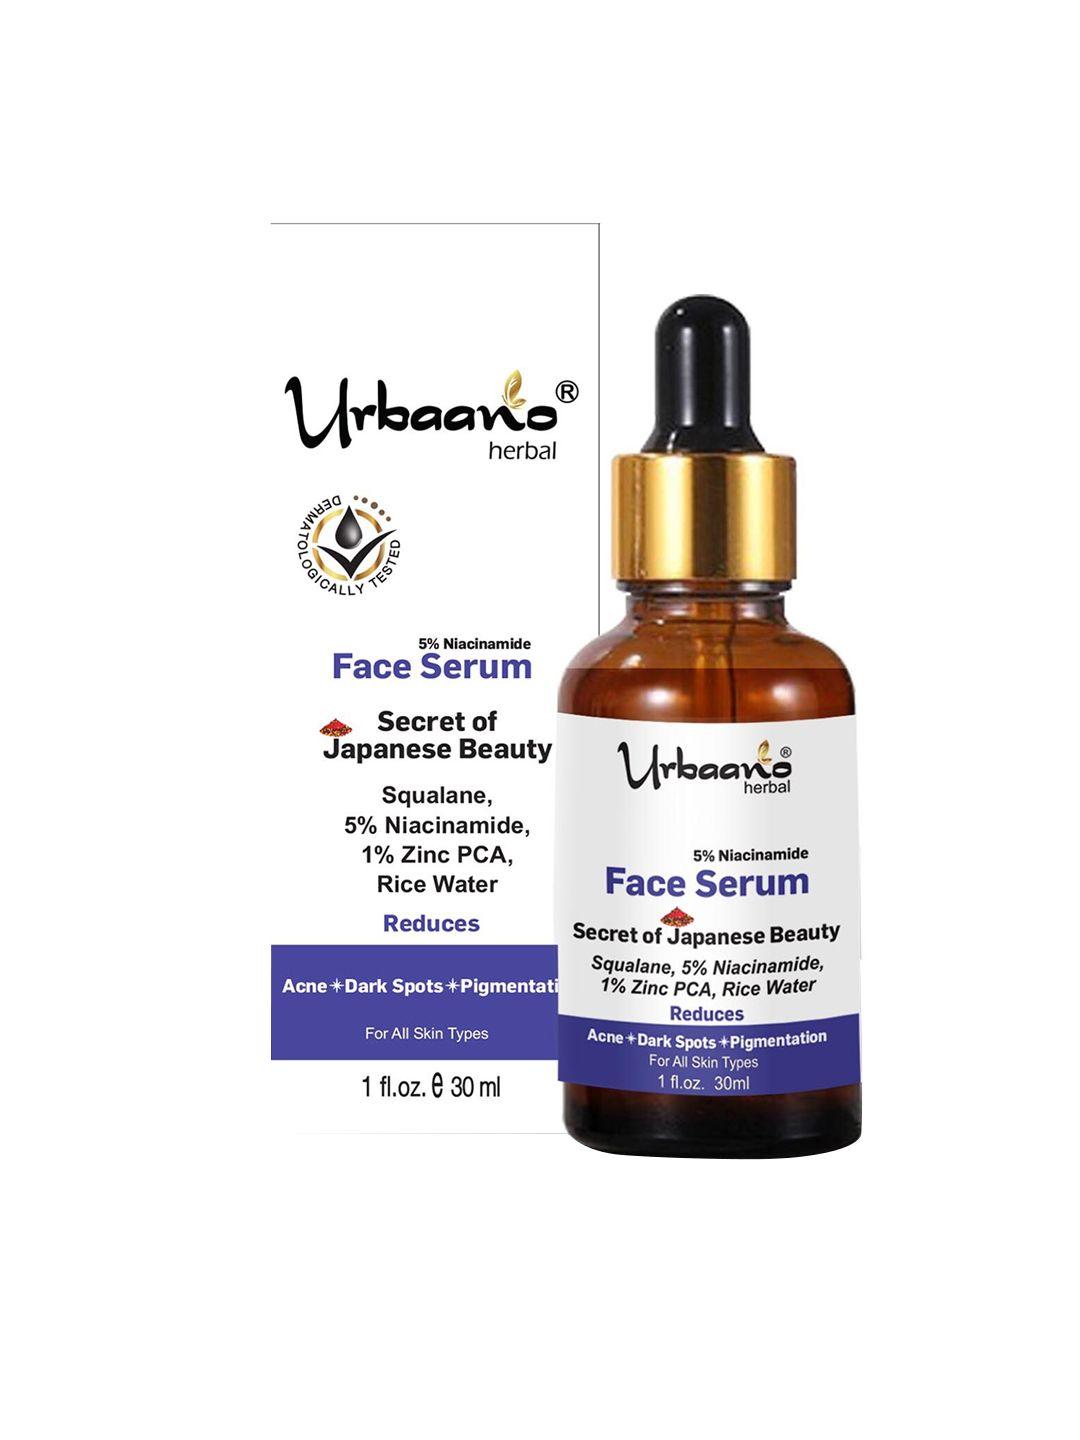 urbaano herbal secret of japanese beauty olive squalane & 5% niacinamide face serum 30 ml